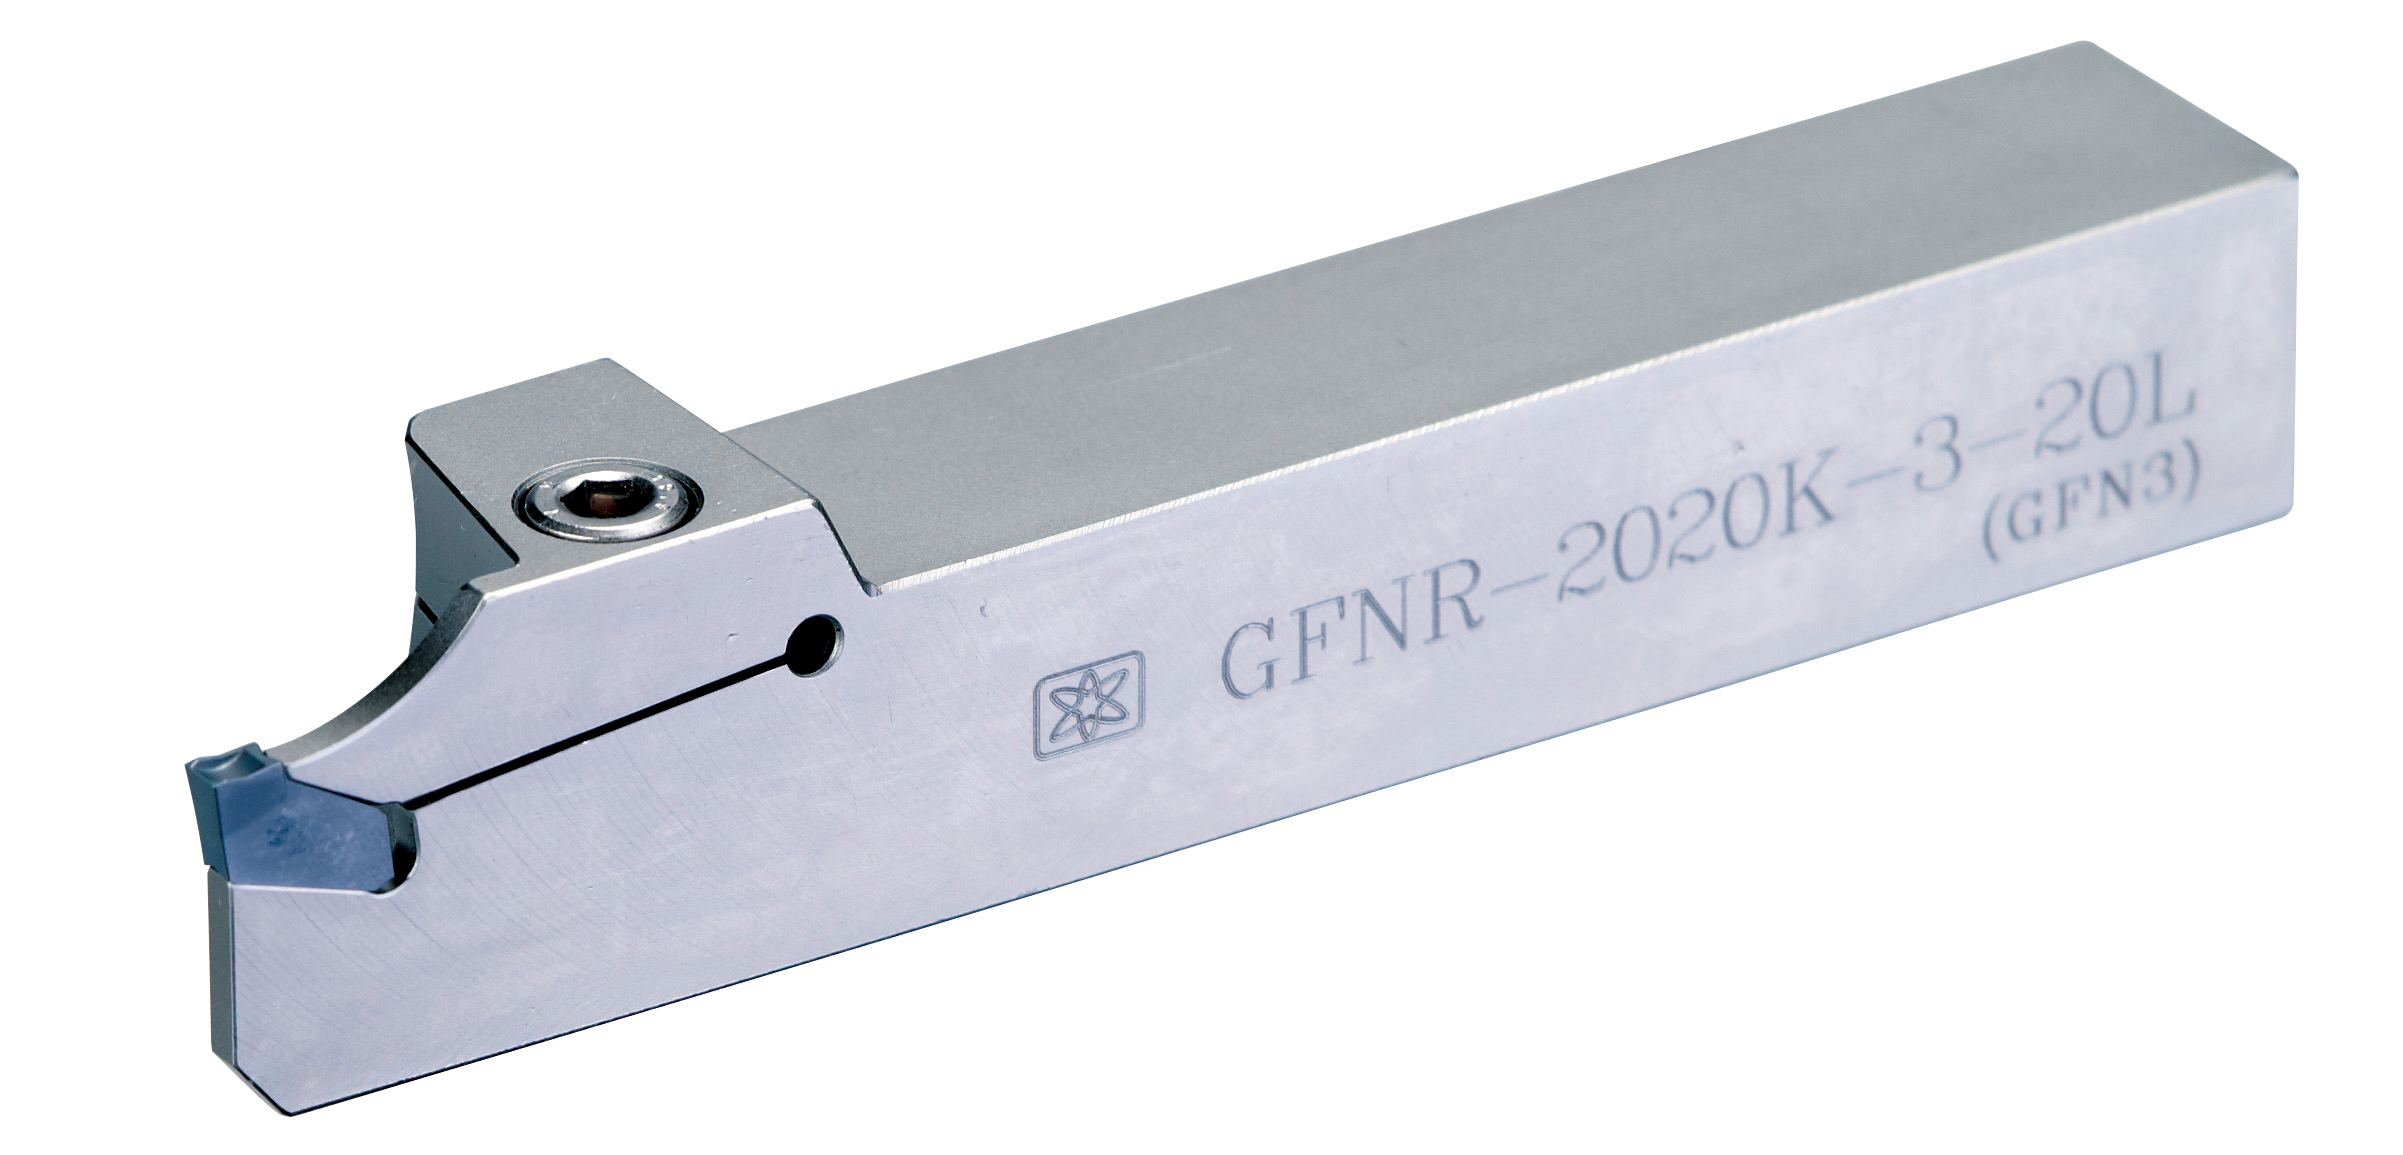 型錄|GFNR (GFN2 / GFN3) 外徑切槽刀